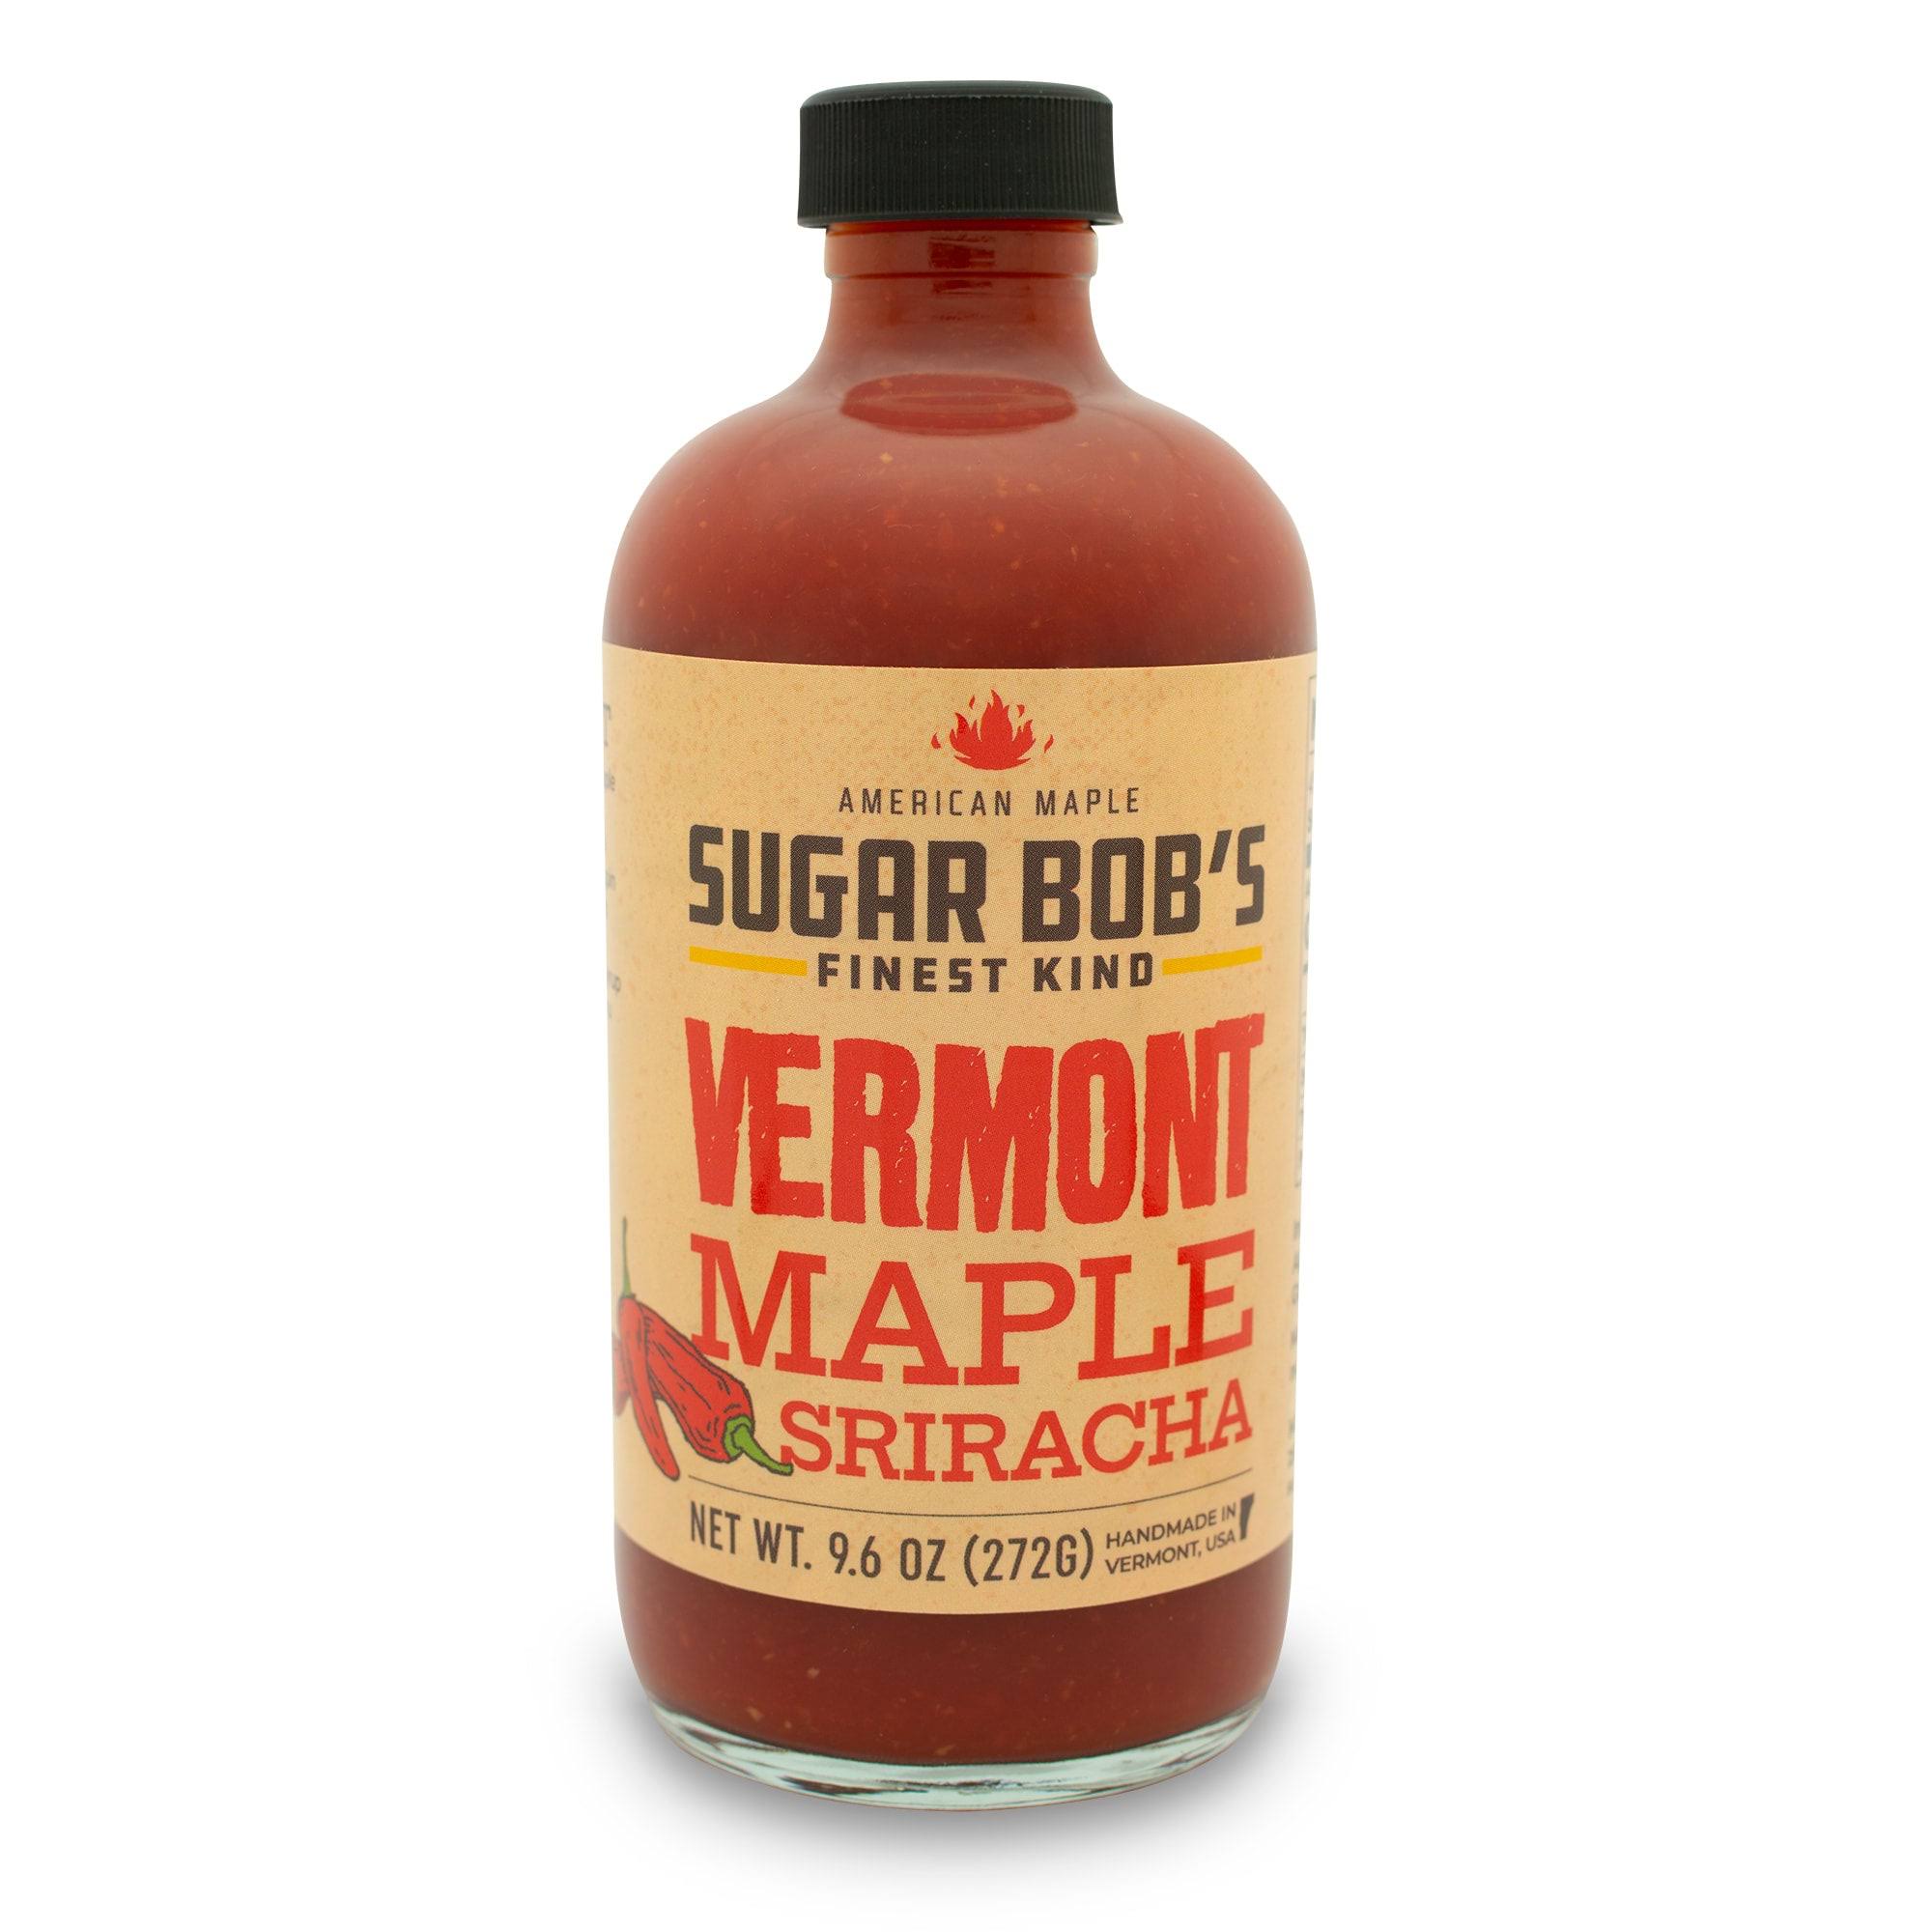 Sugar Bobs Finest Kind - Vermont Maple Sriracha, Original Sweet and SP